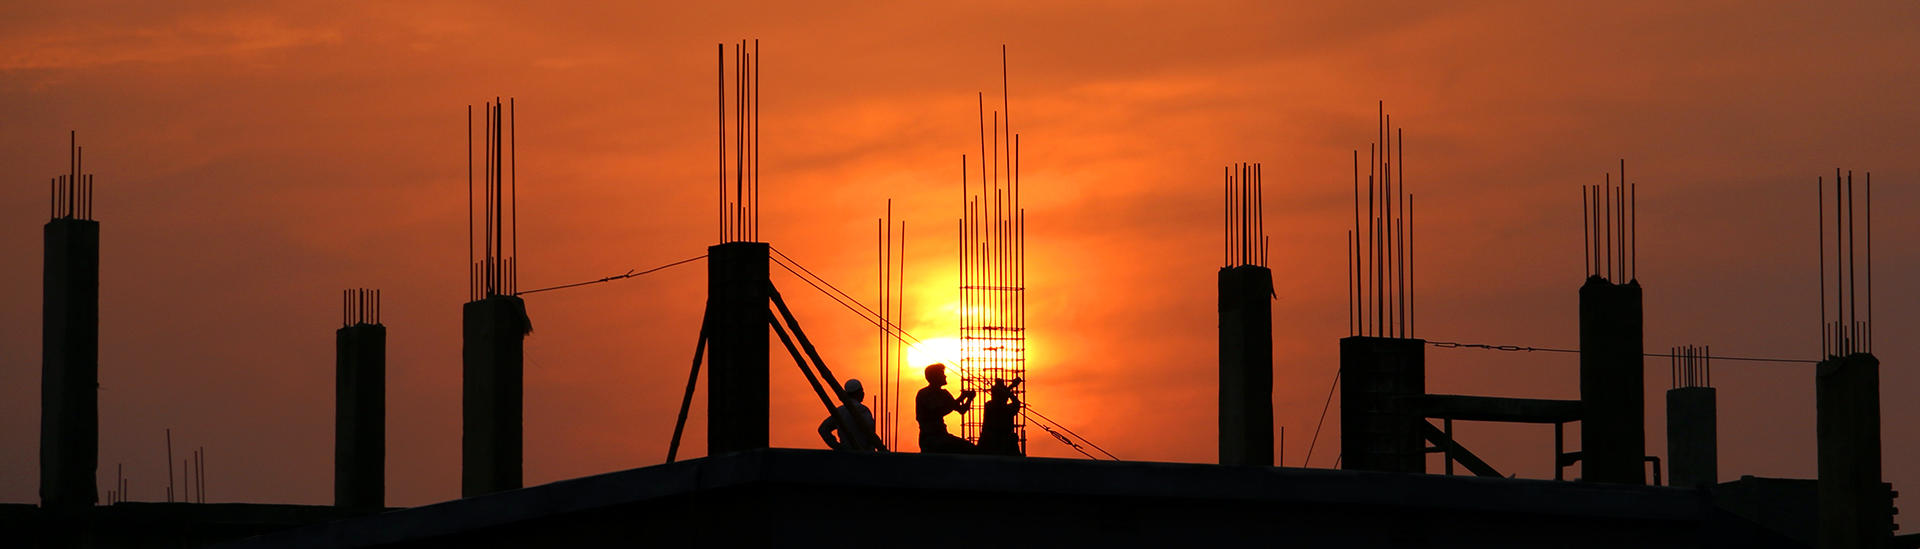 Construction Management Software for Commercial Contractors